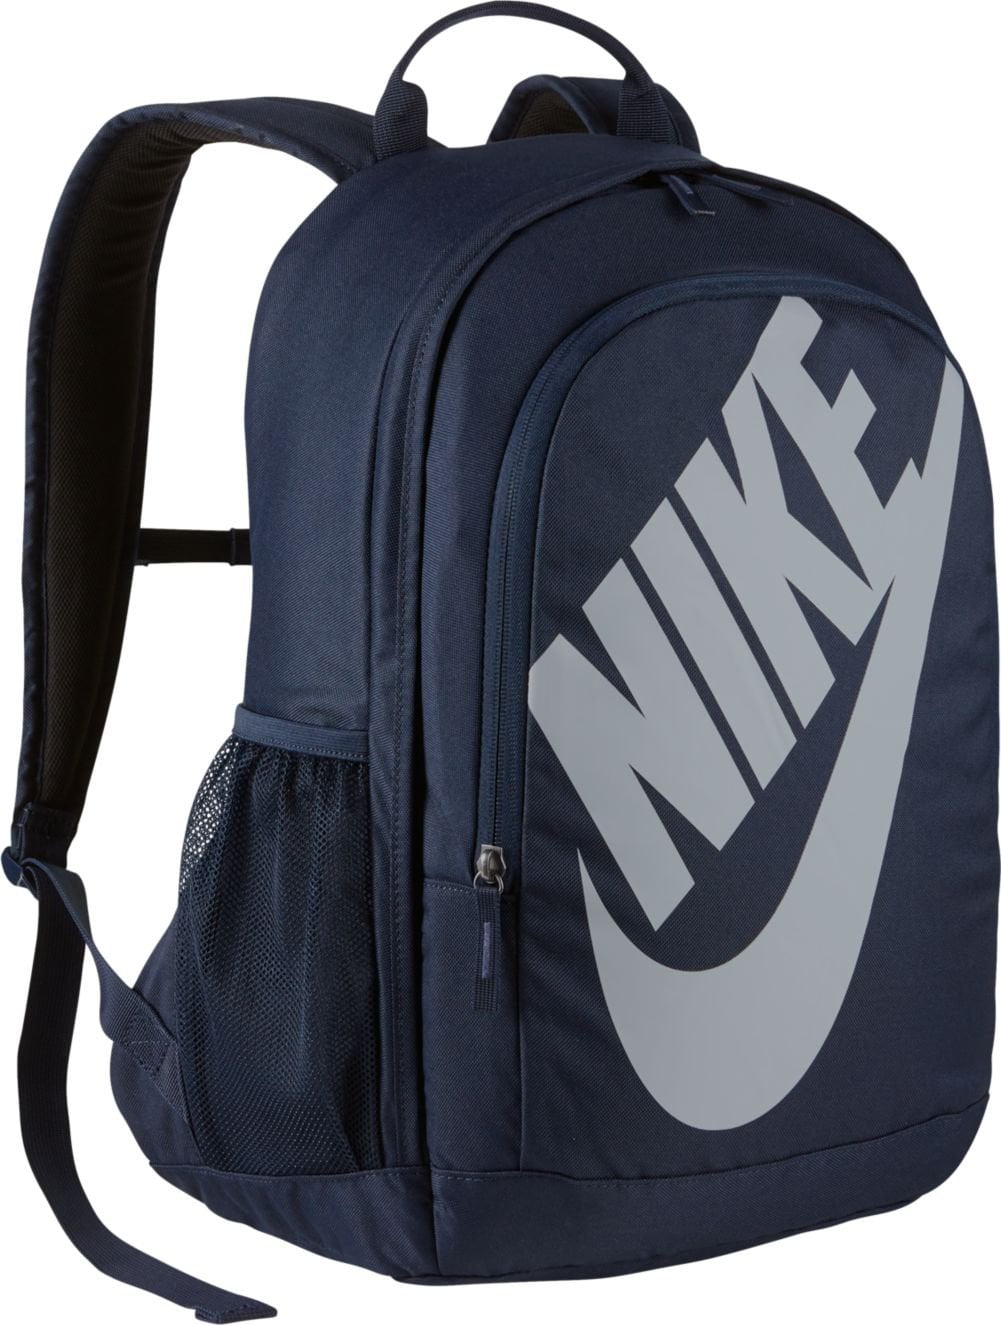 nike air hayward backpack light grey